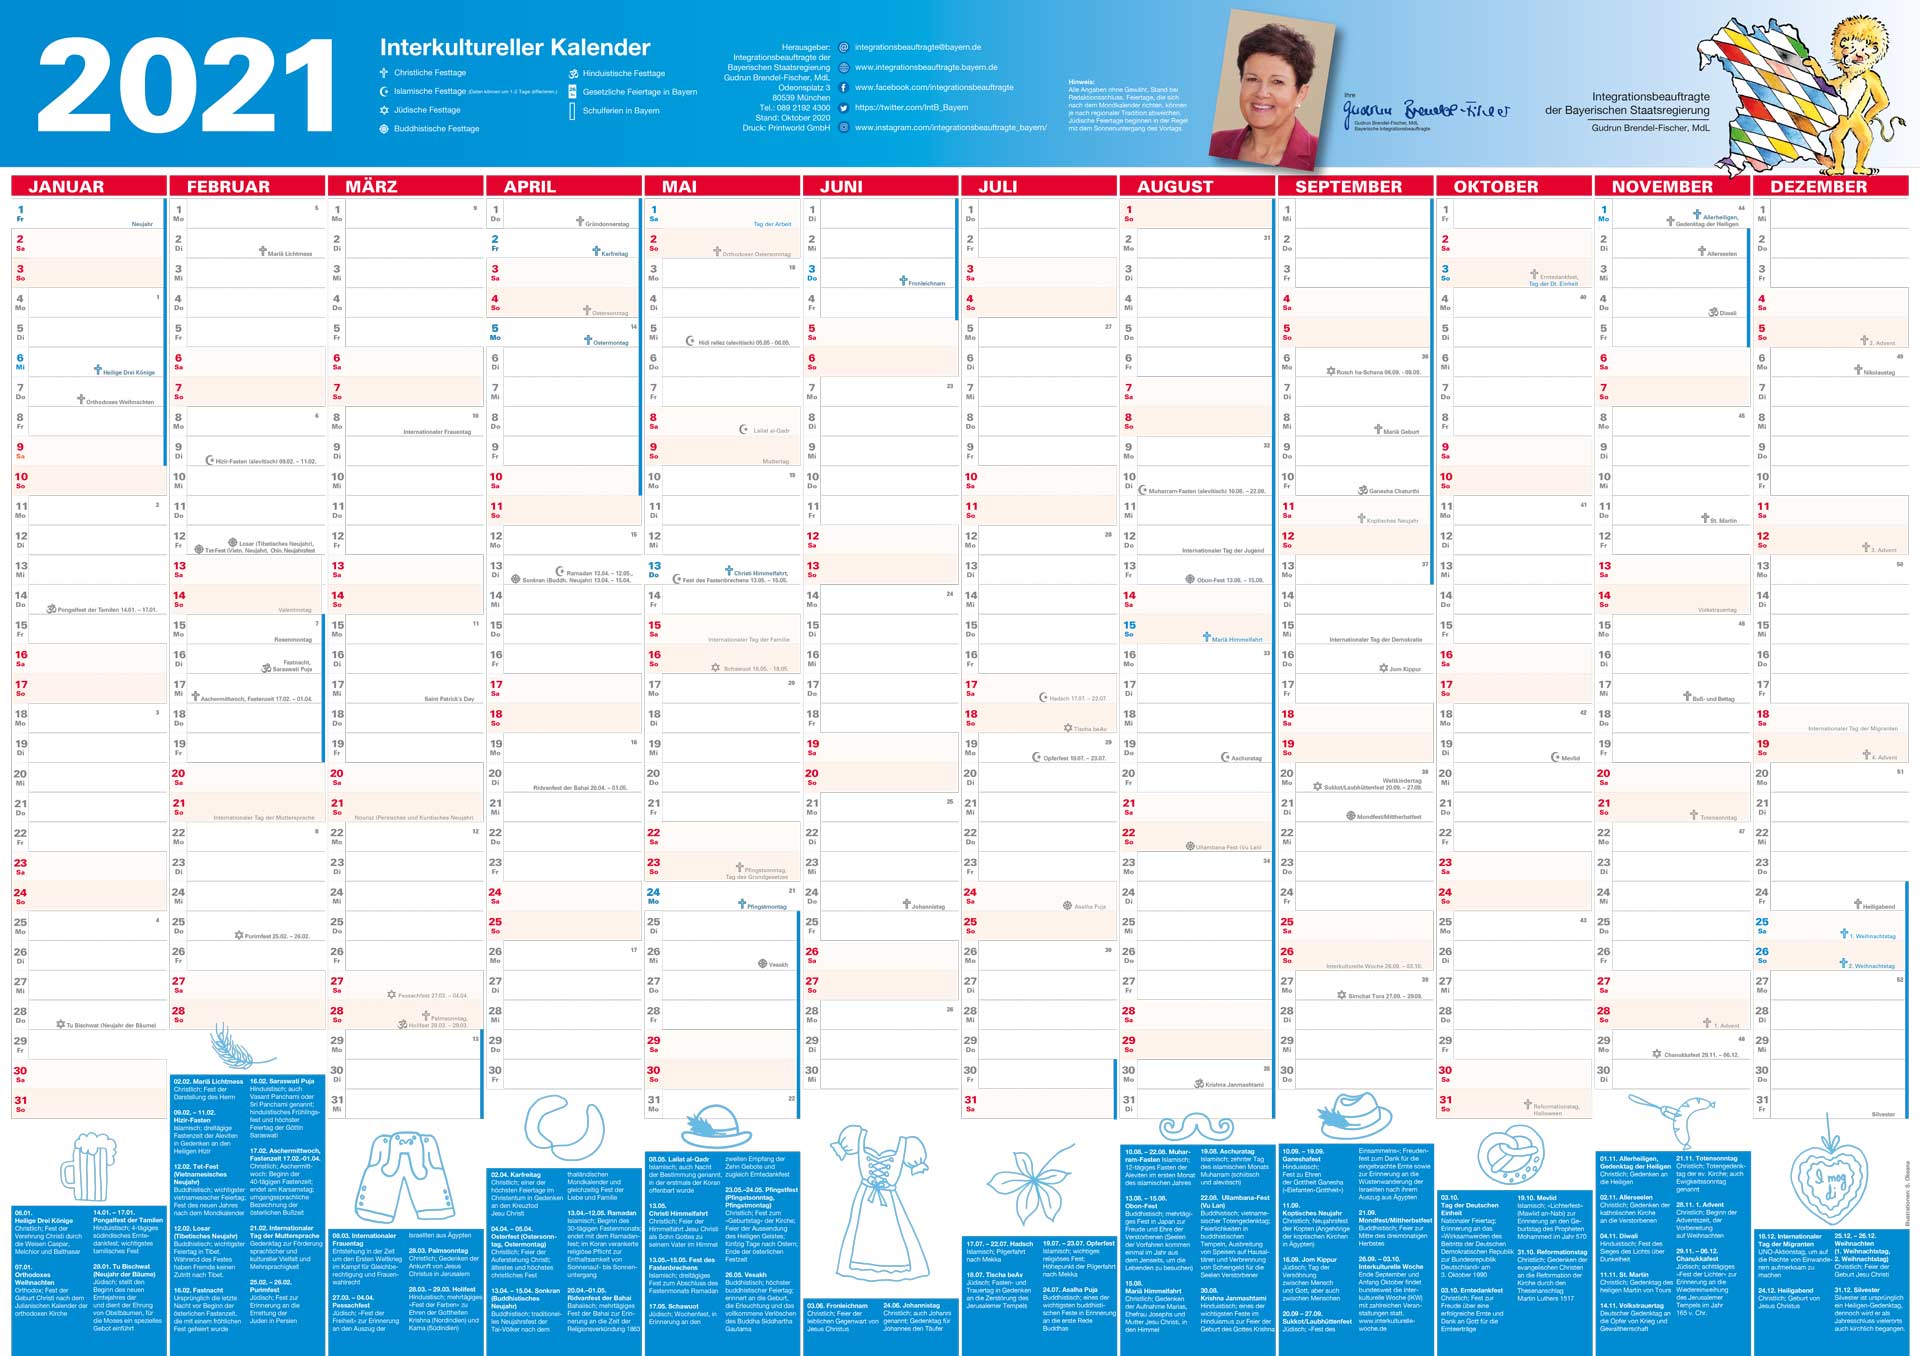 Interkultureller Kalender 2021 (Grafik: Bayerische Staatsregierung)